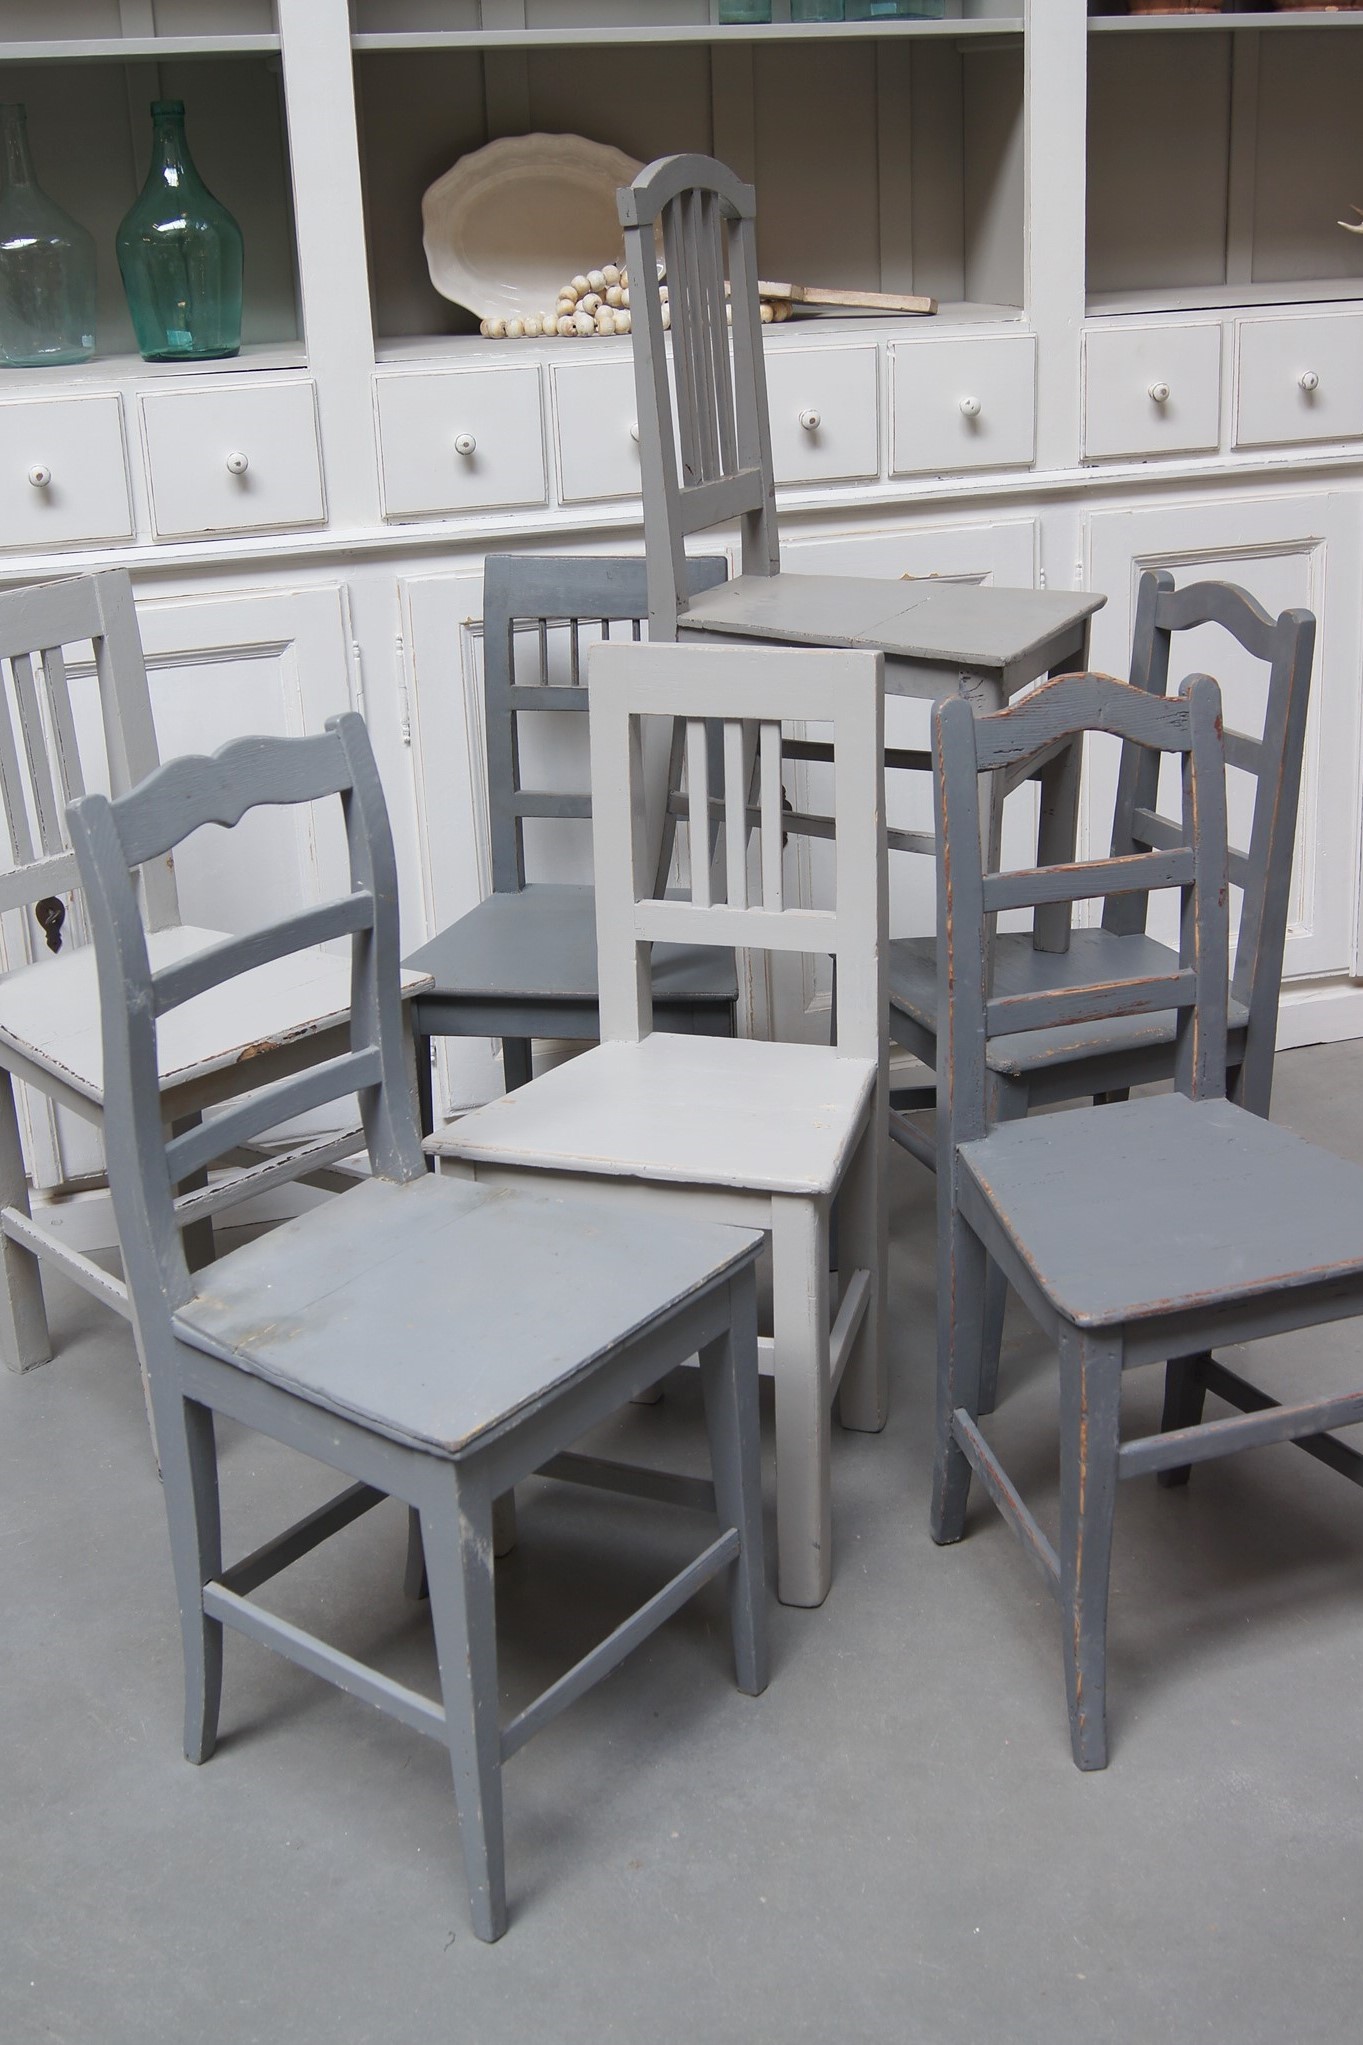 Shop brocante stoelen in alle kleuren BASICS! | Old